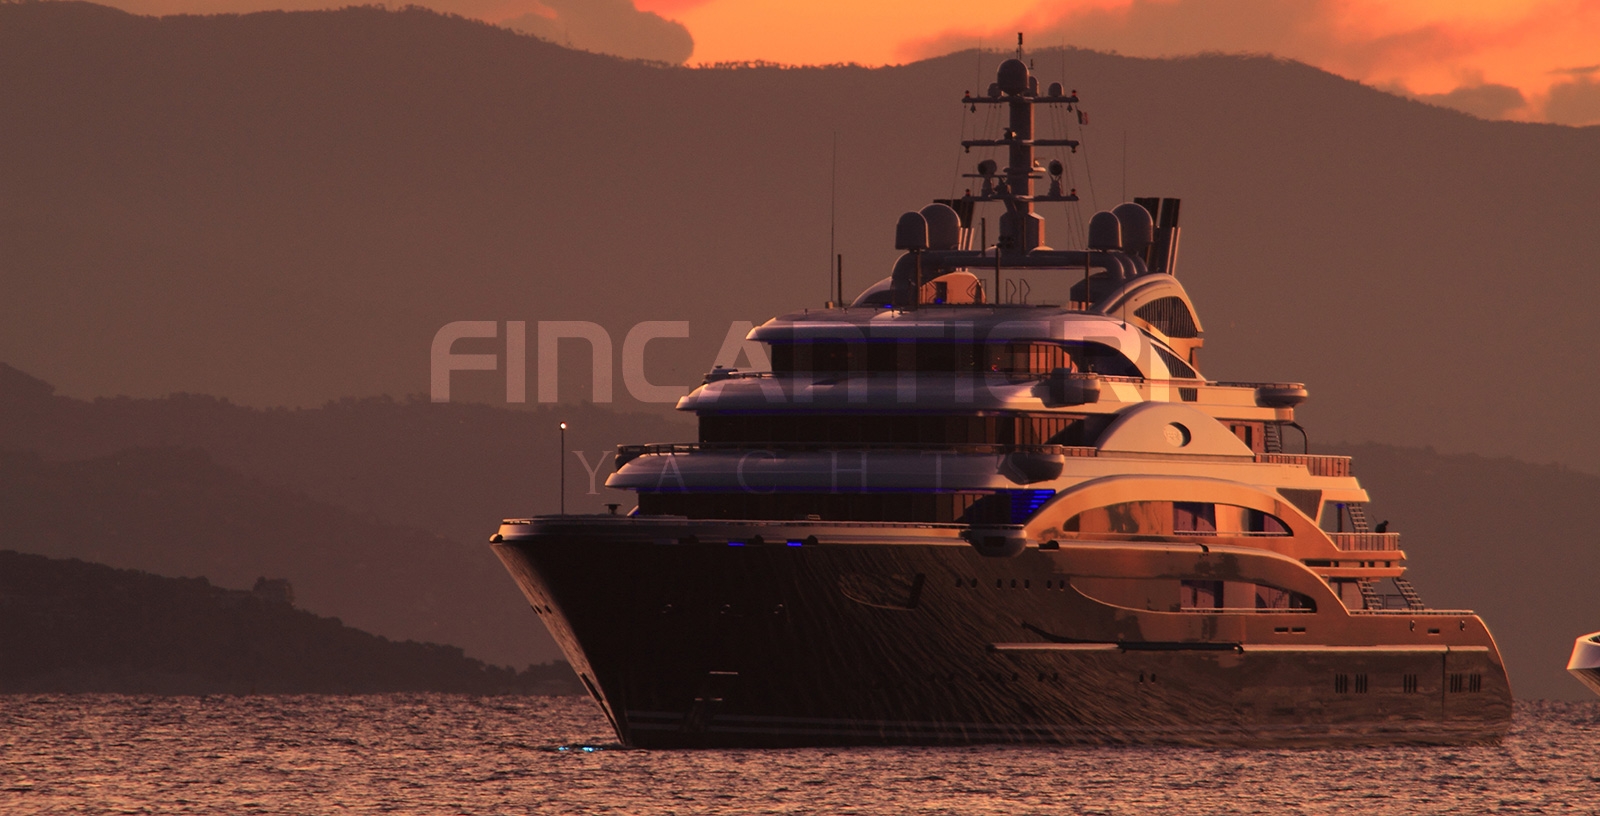 Yacht SERENE By Fincantieri - Sunset